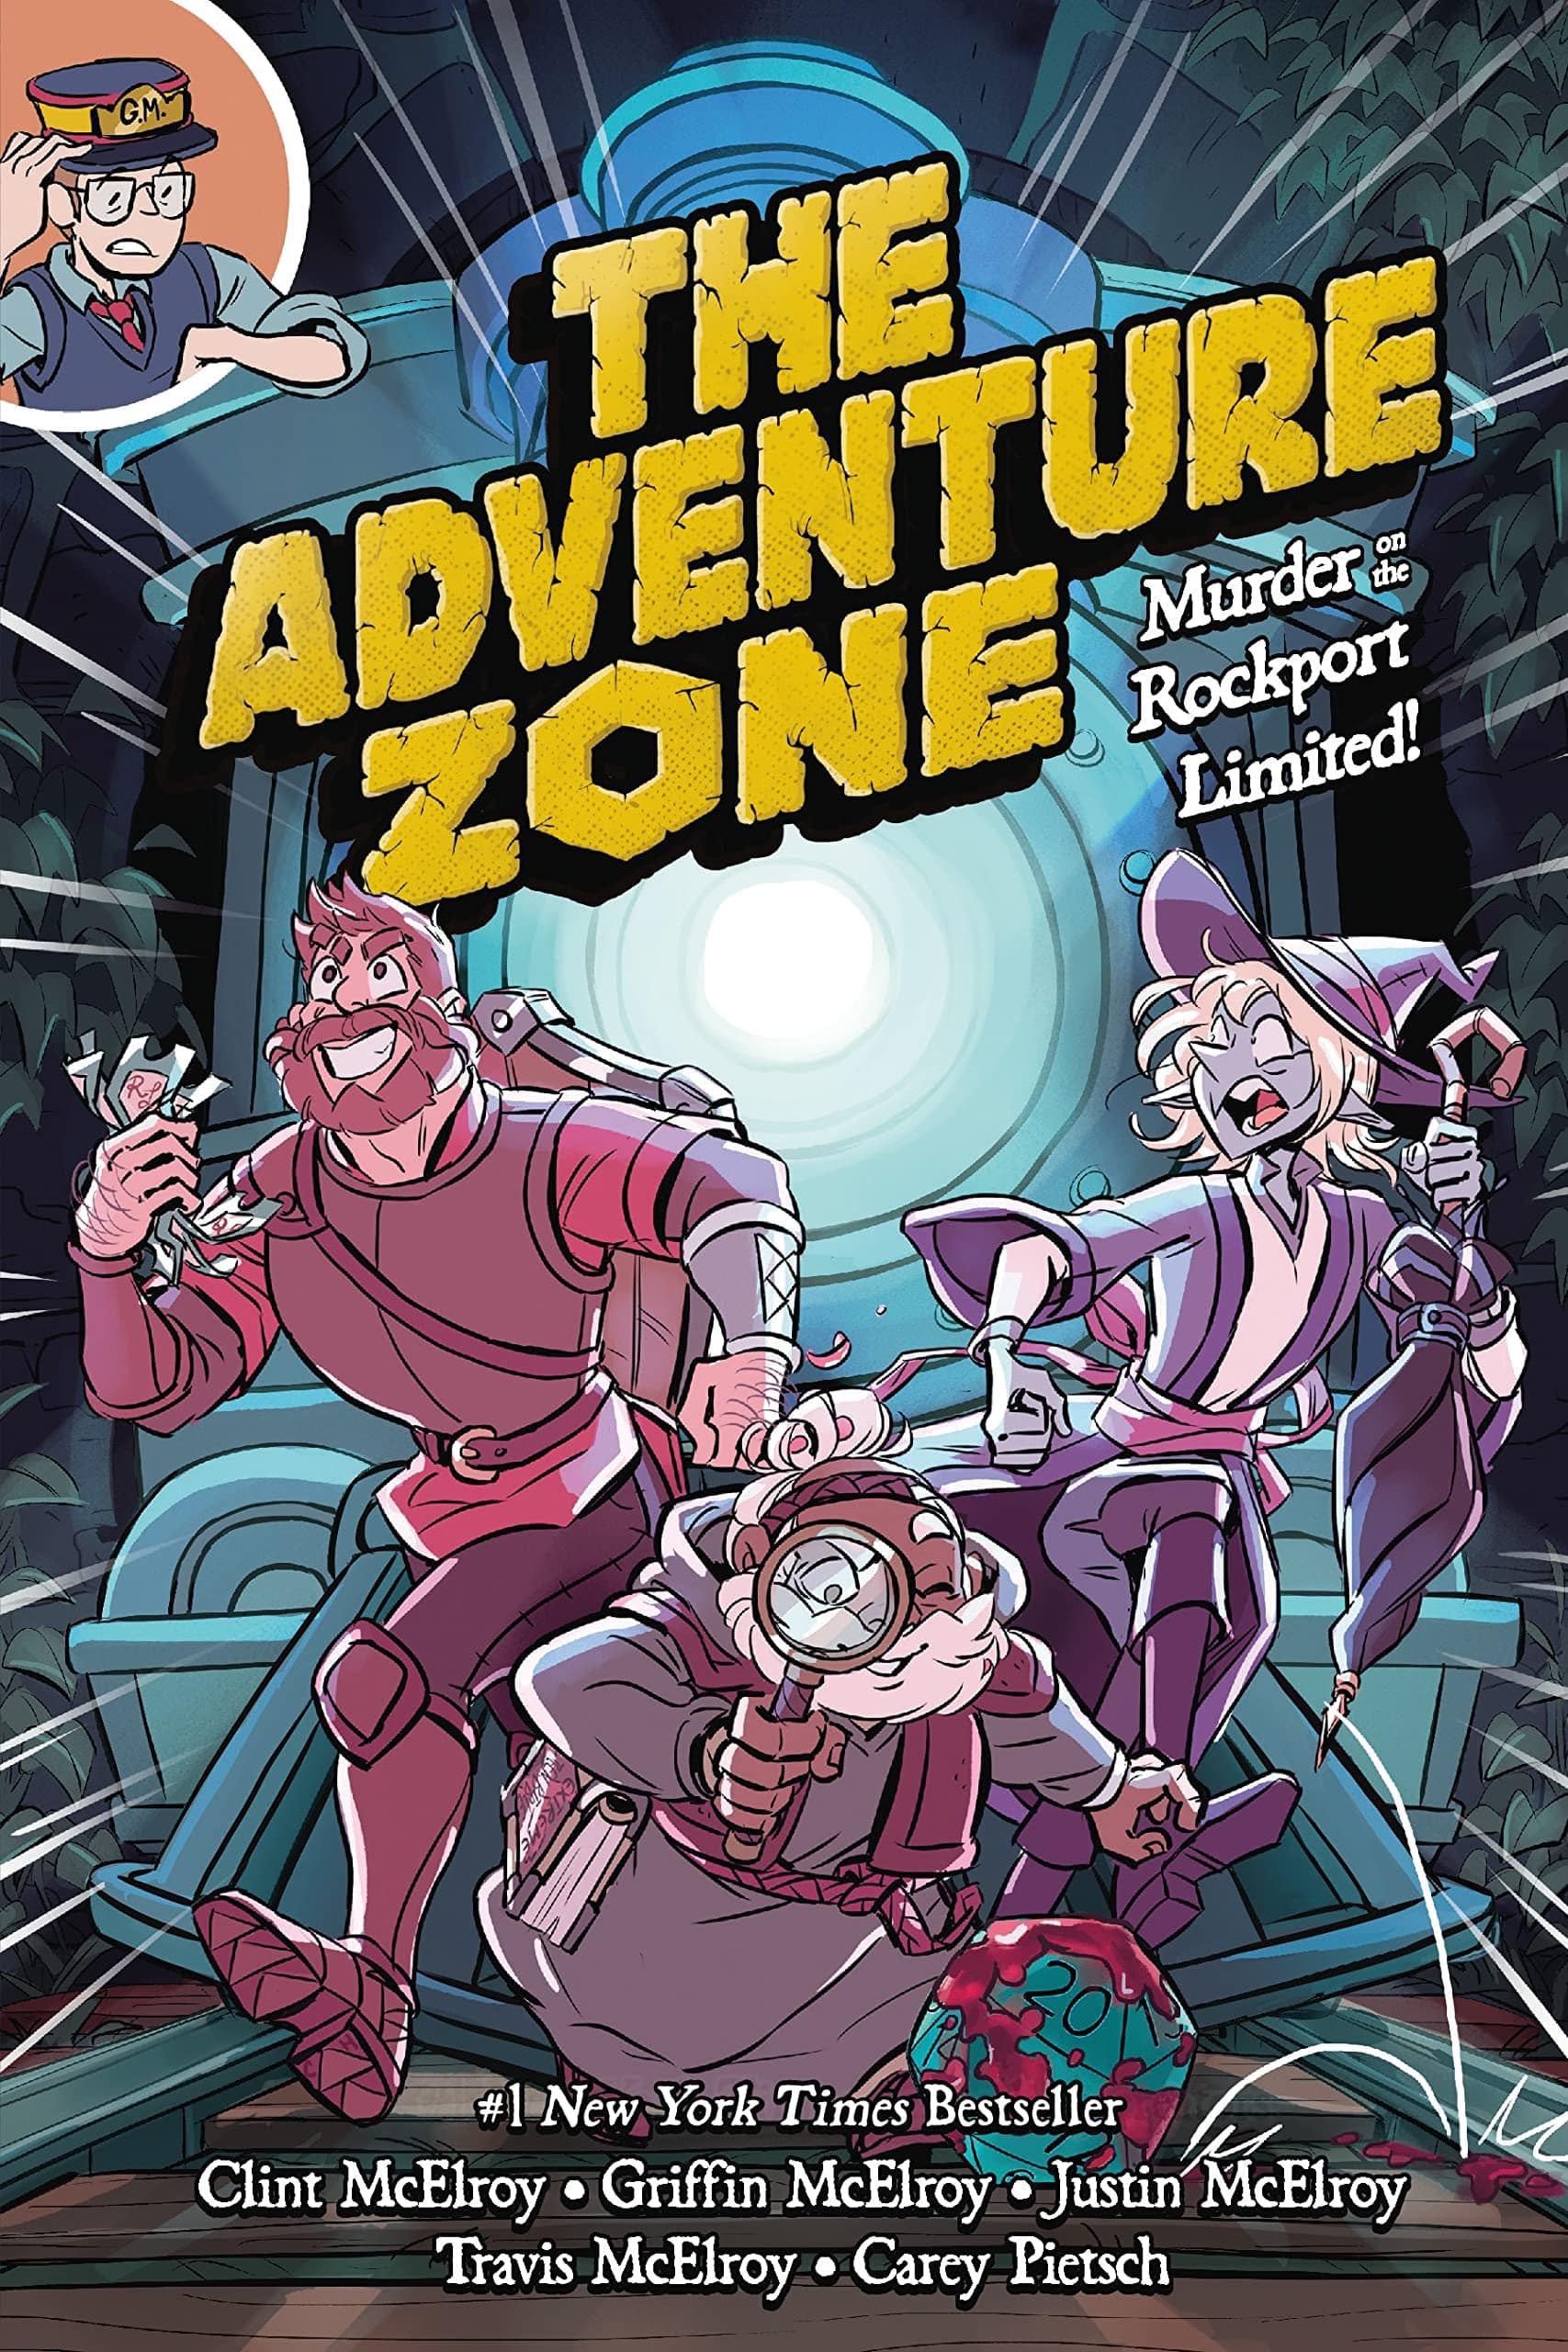 Adventure Zone Vol. 2: Murder on the Rockport Limited! TP - Third Eye